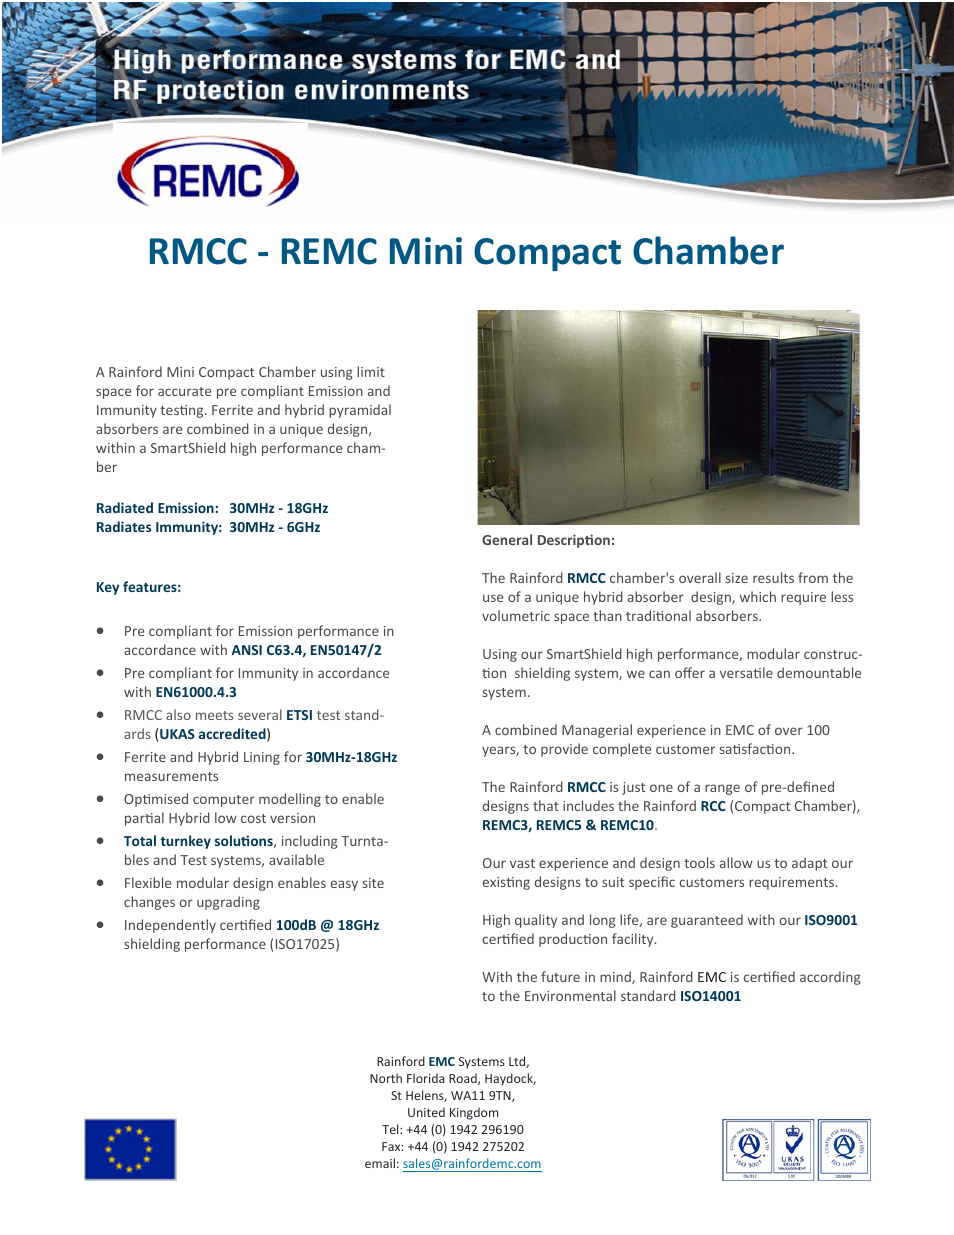 EMC-MC Mini Compact Chamber